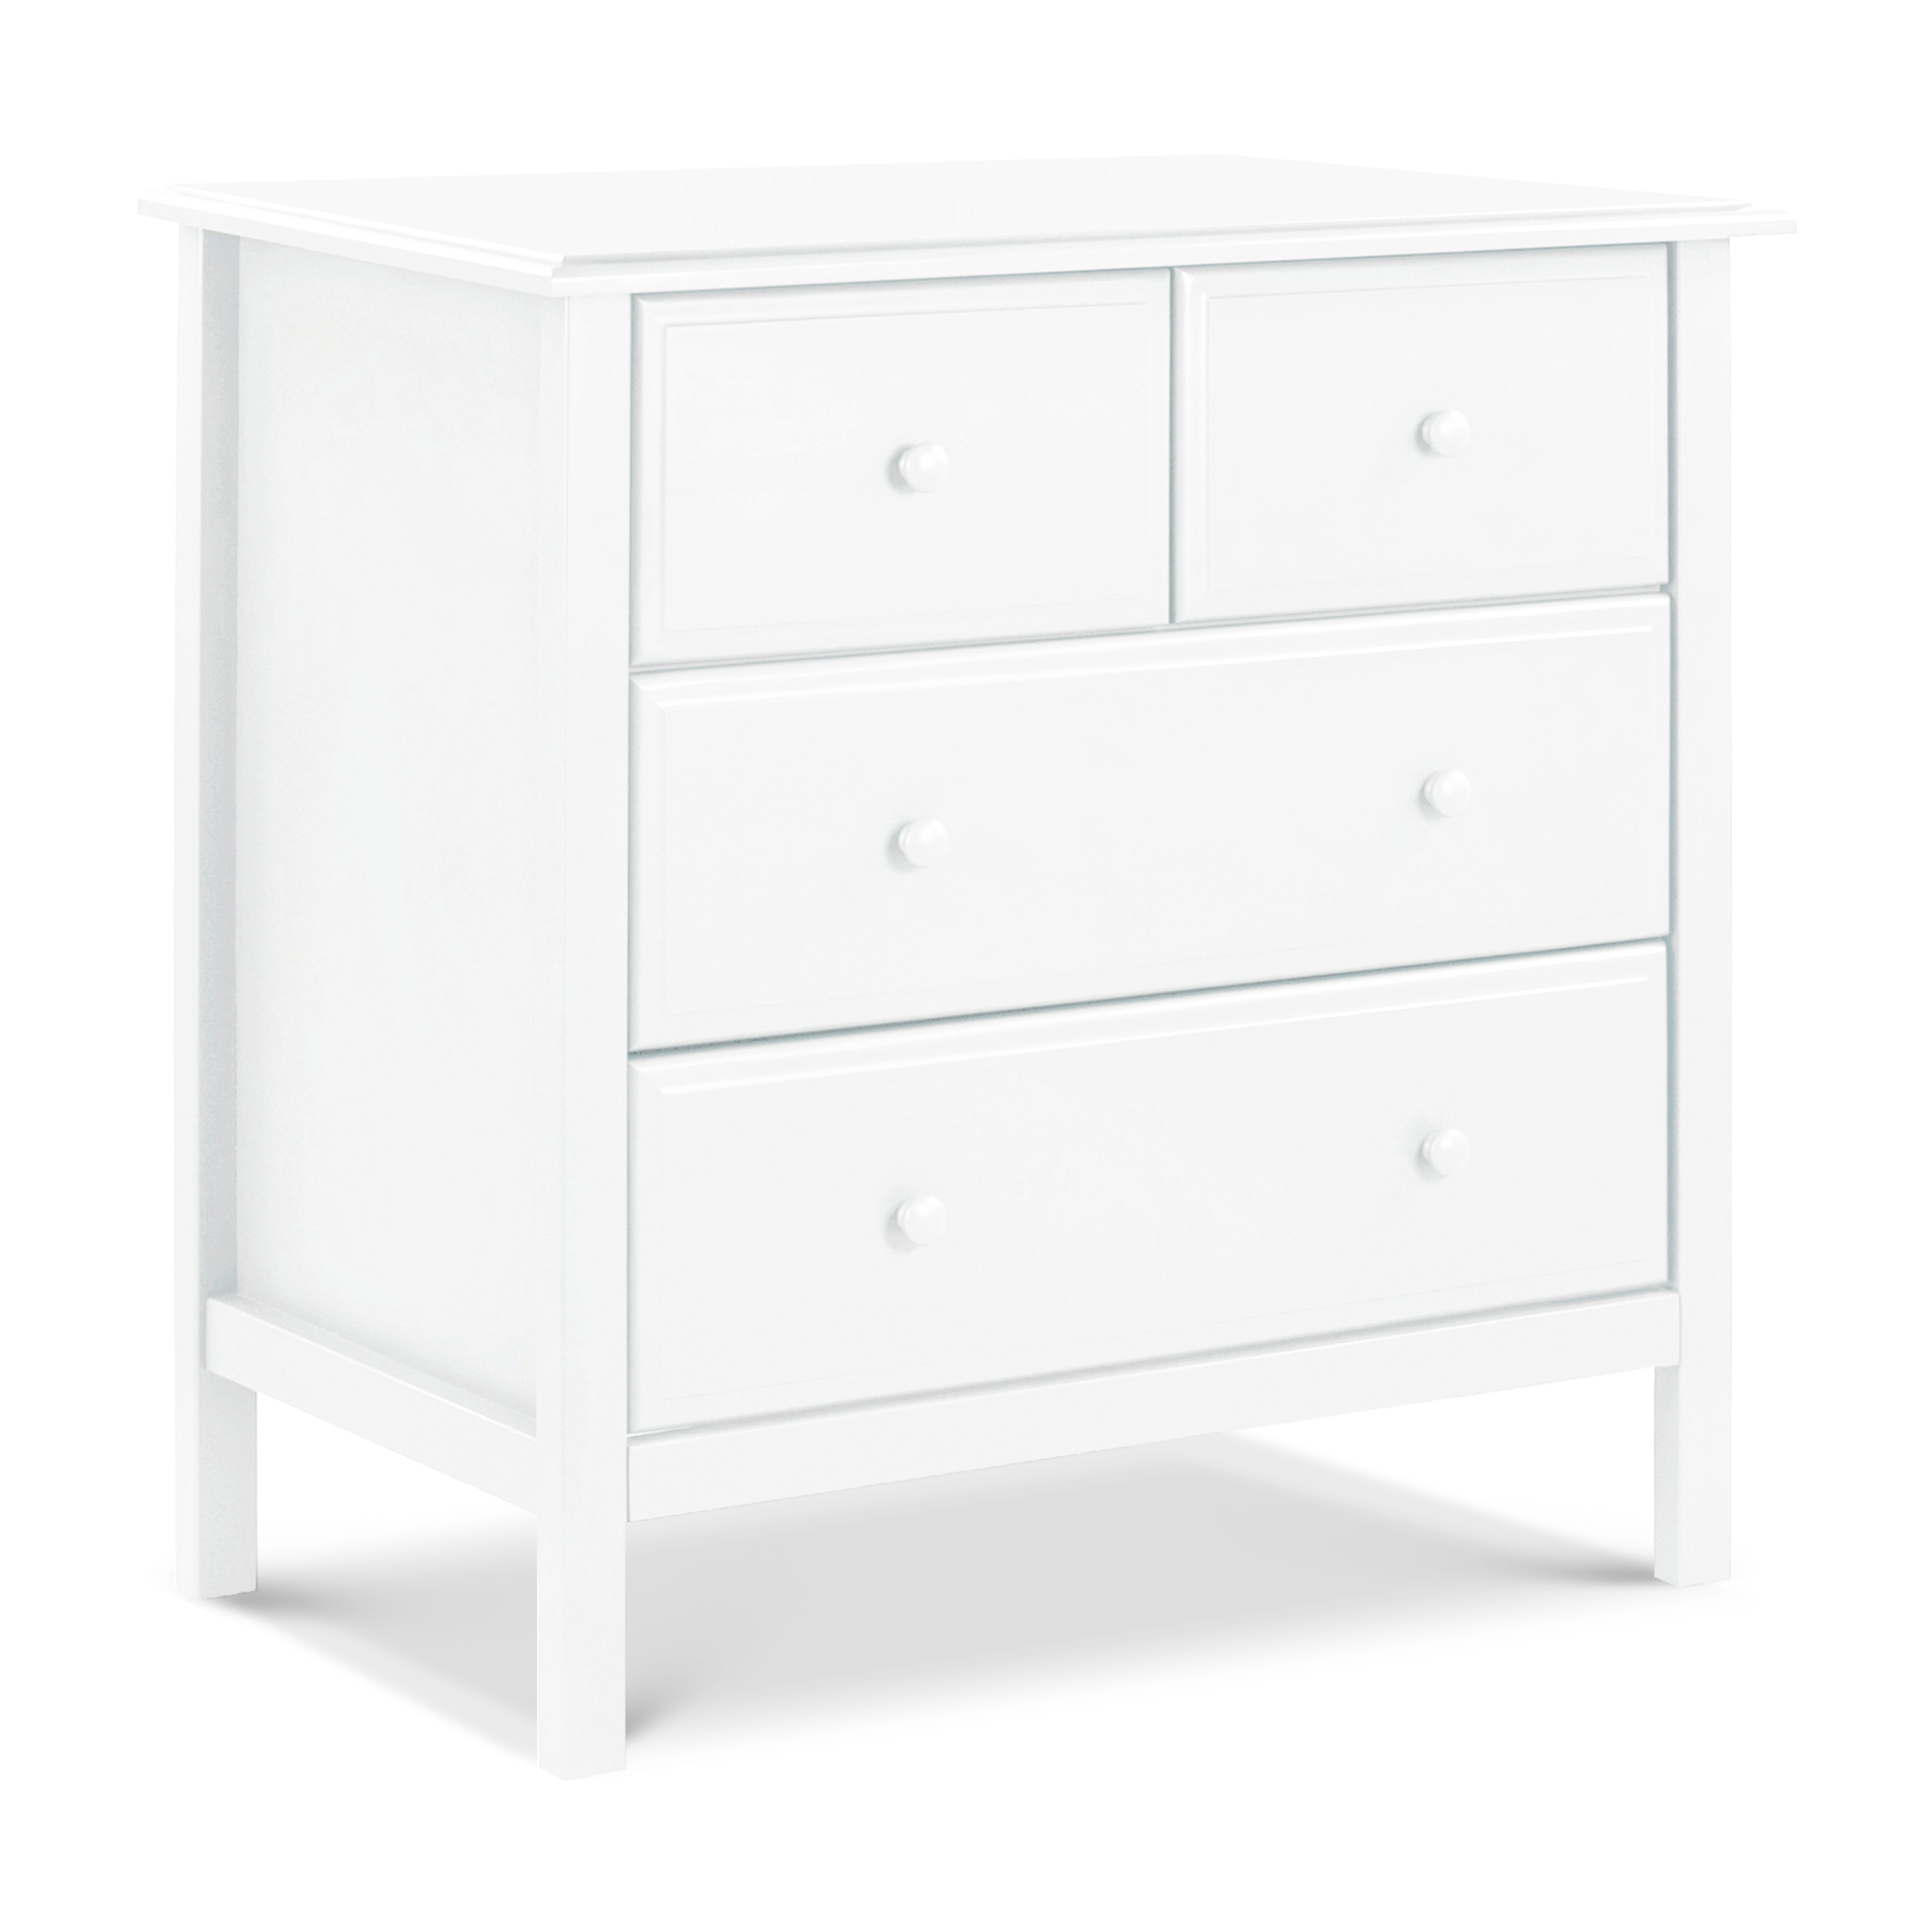 DaVinci Autumn 4 in 1 Convertible Crib, 4 Drawer Dresser in White  Hypoallergenic Universal Fit 6 inch Ultra Firm Deluxe Crib Mattress Value Set - image 2 of 4